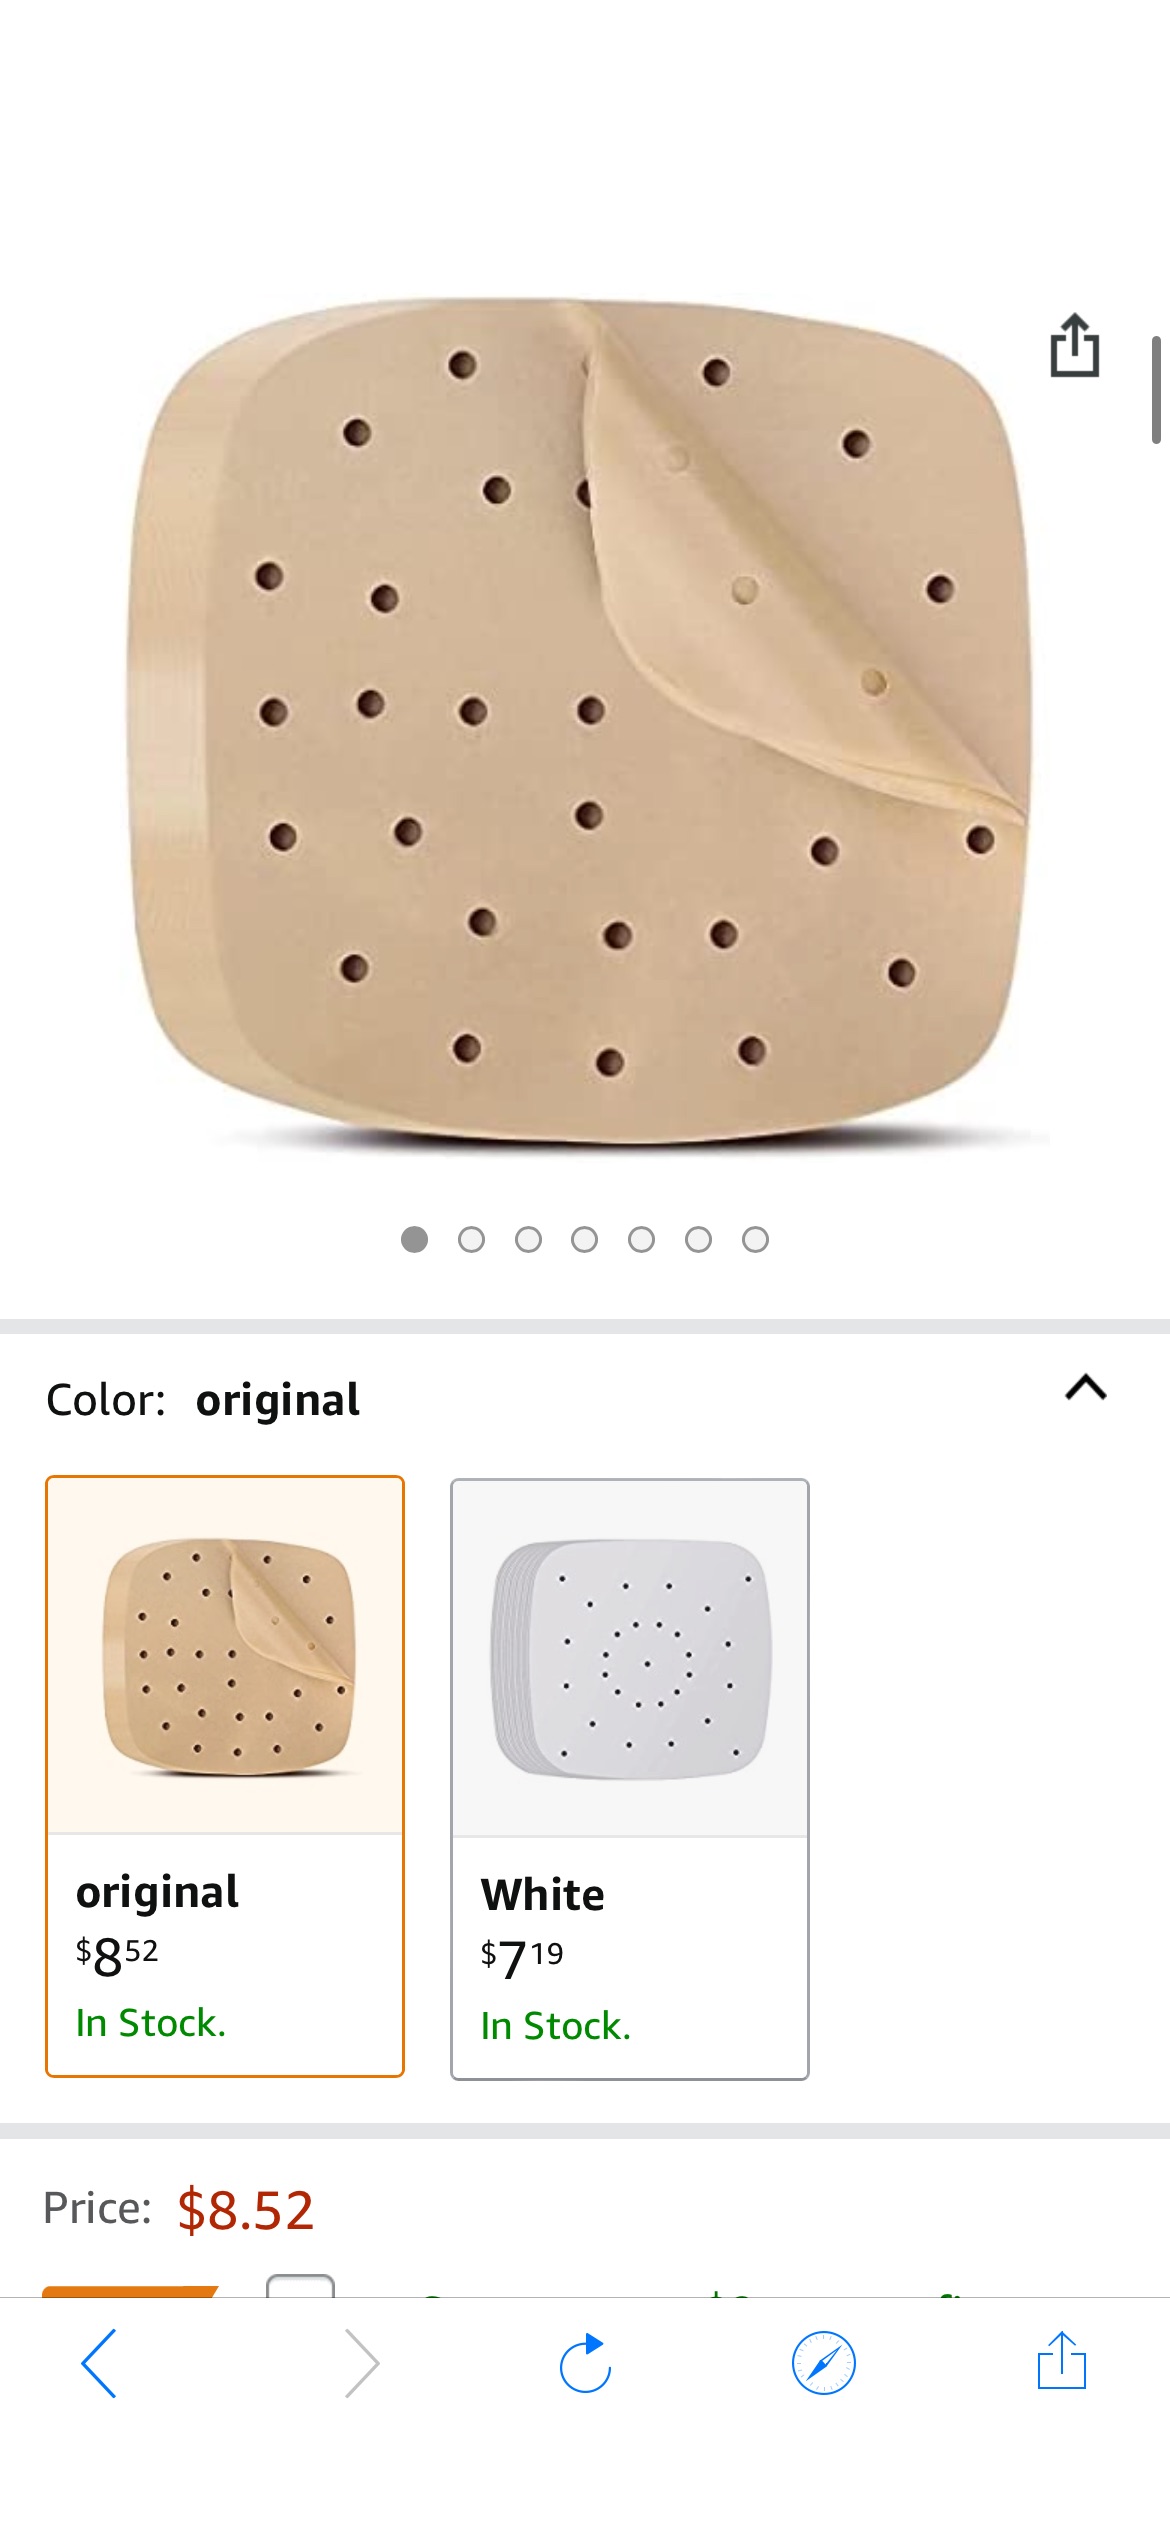 Amazon.com: Air Fryer Parchment Paper Liners: 200PCS 8.5 inch Air Fryer disposable paper liner - Square Perforated空气炸锅垫纸